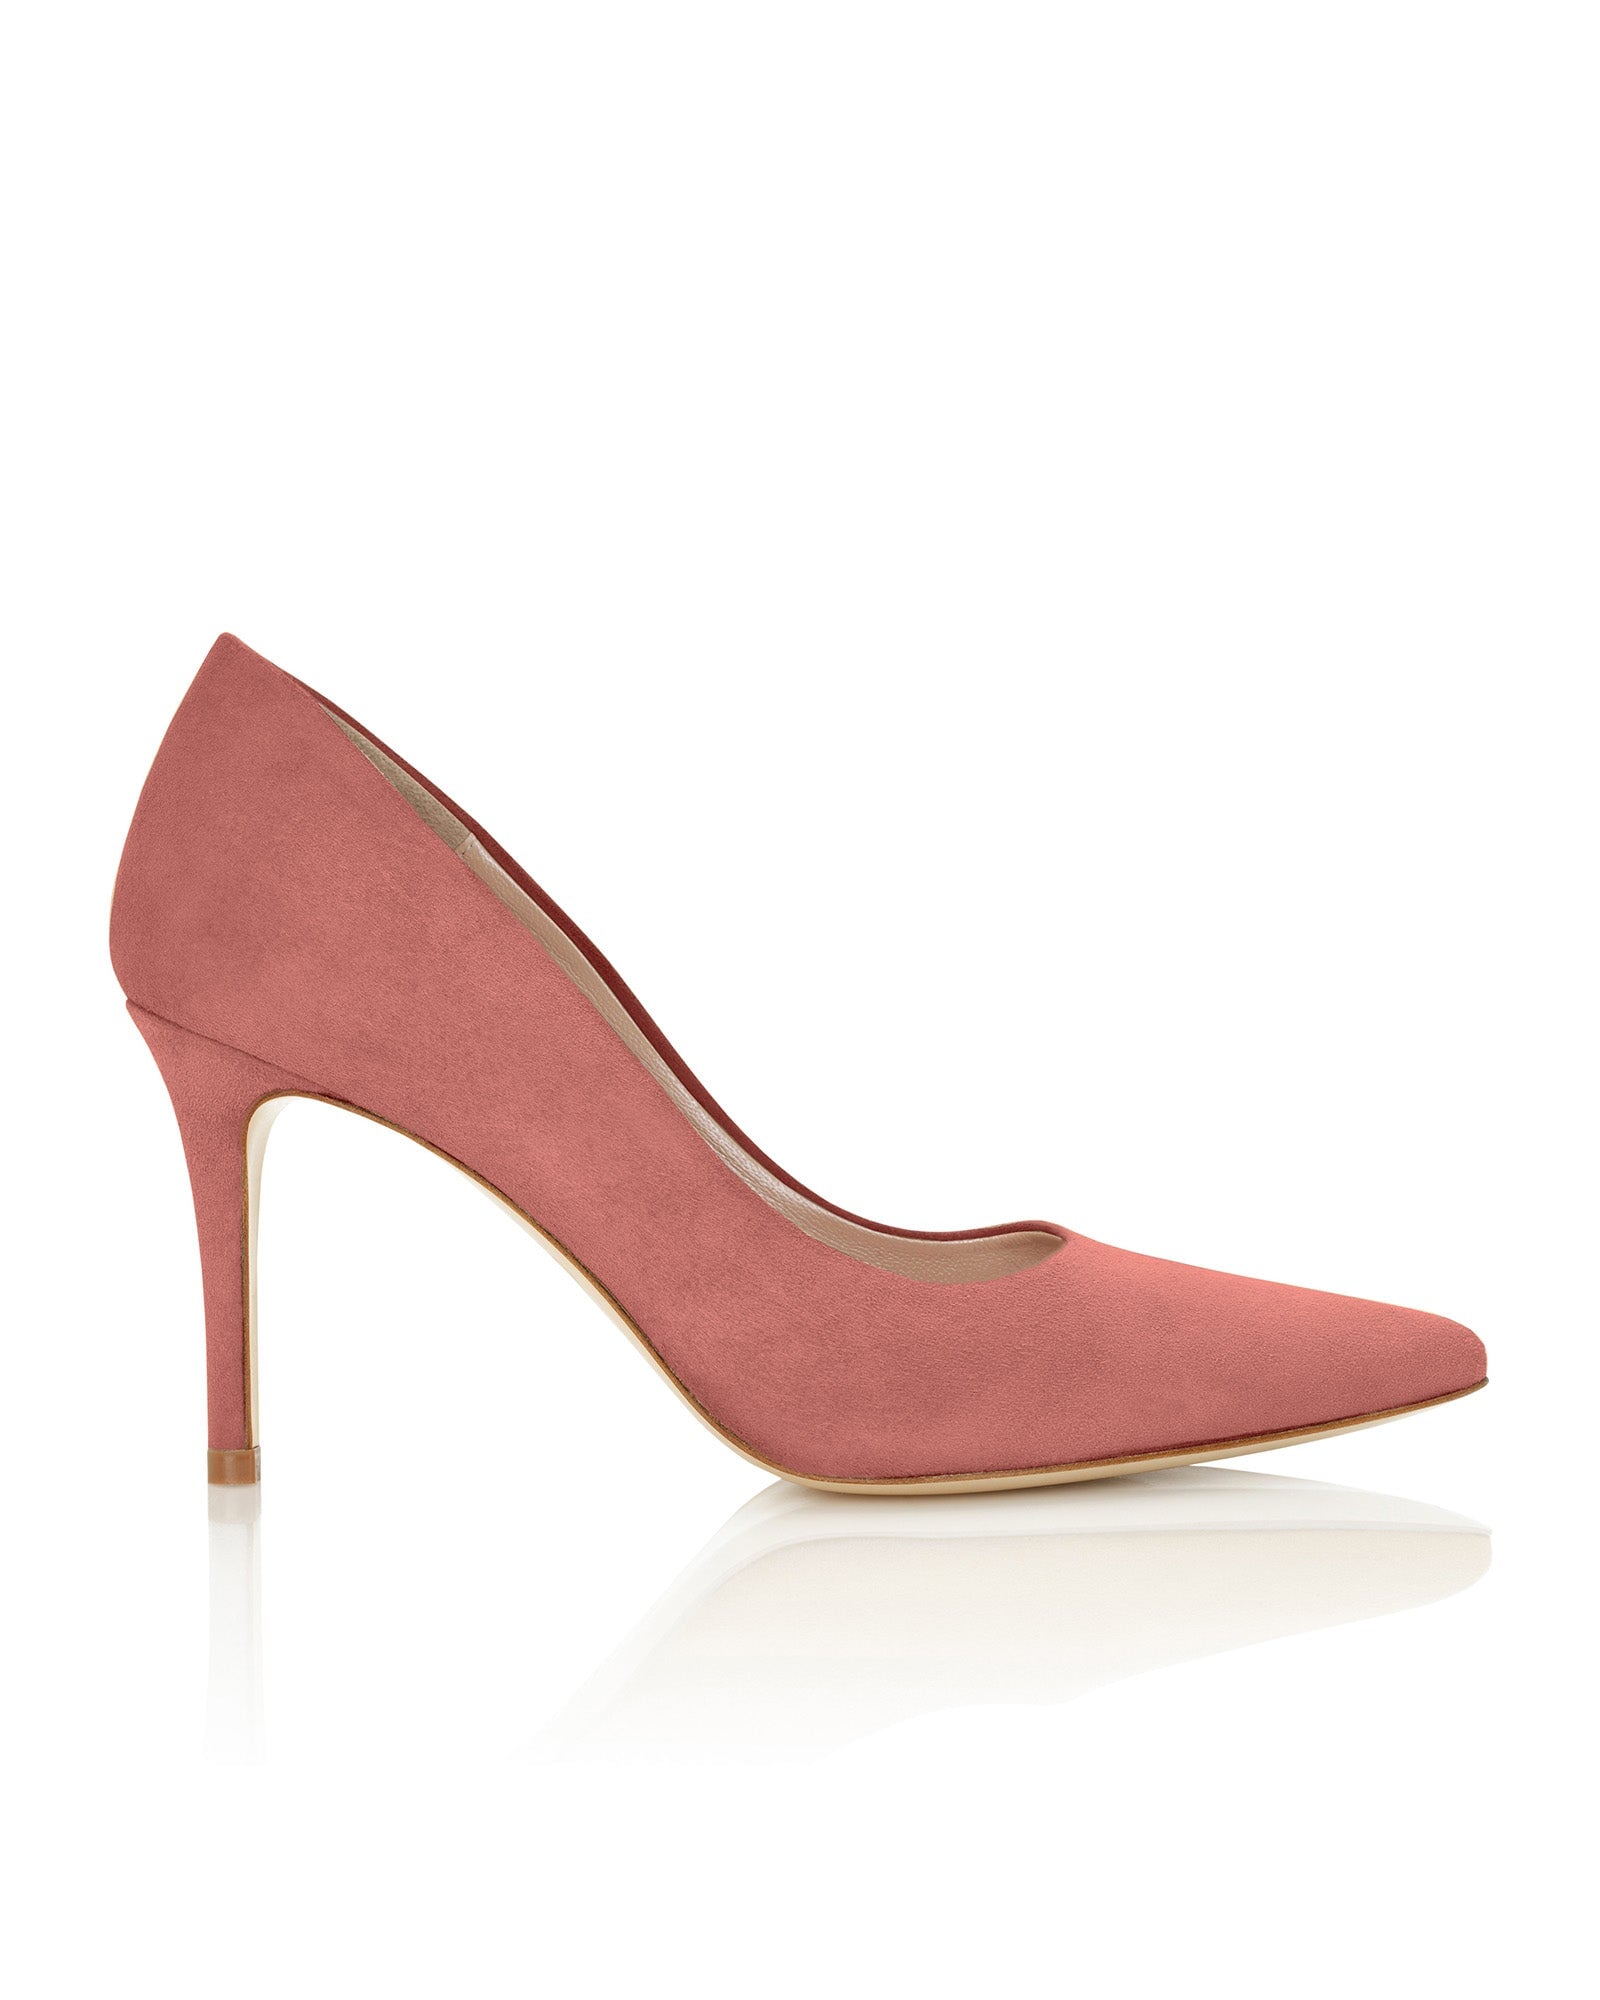 Claudia Makeup Fashion Shoe Pink Pointed Court Shoe  image